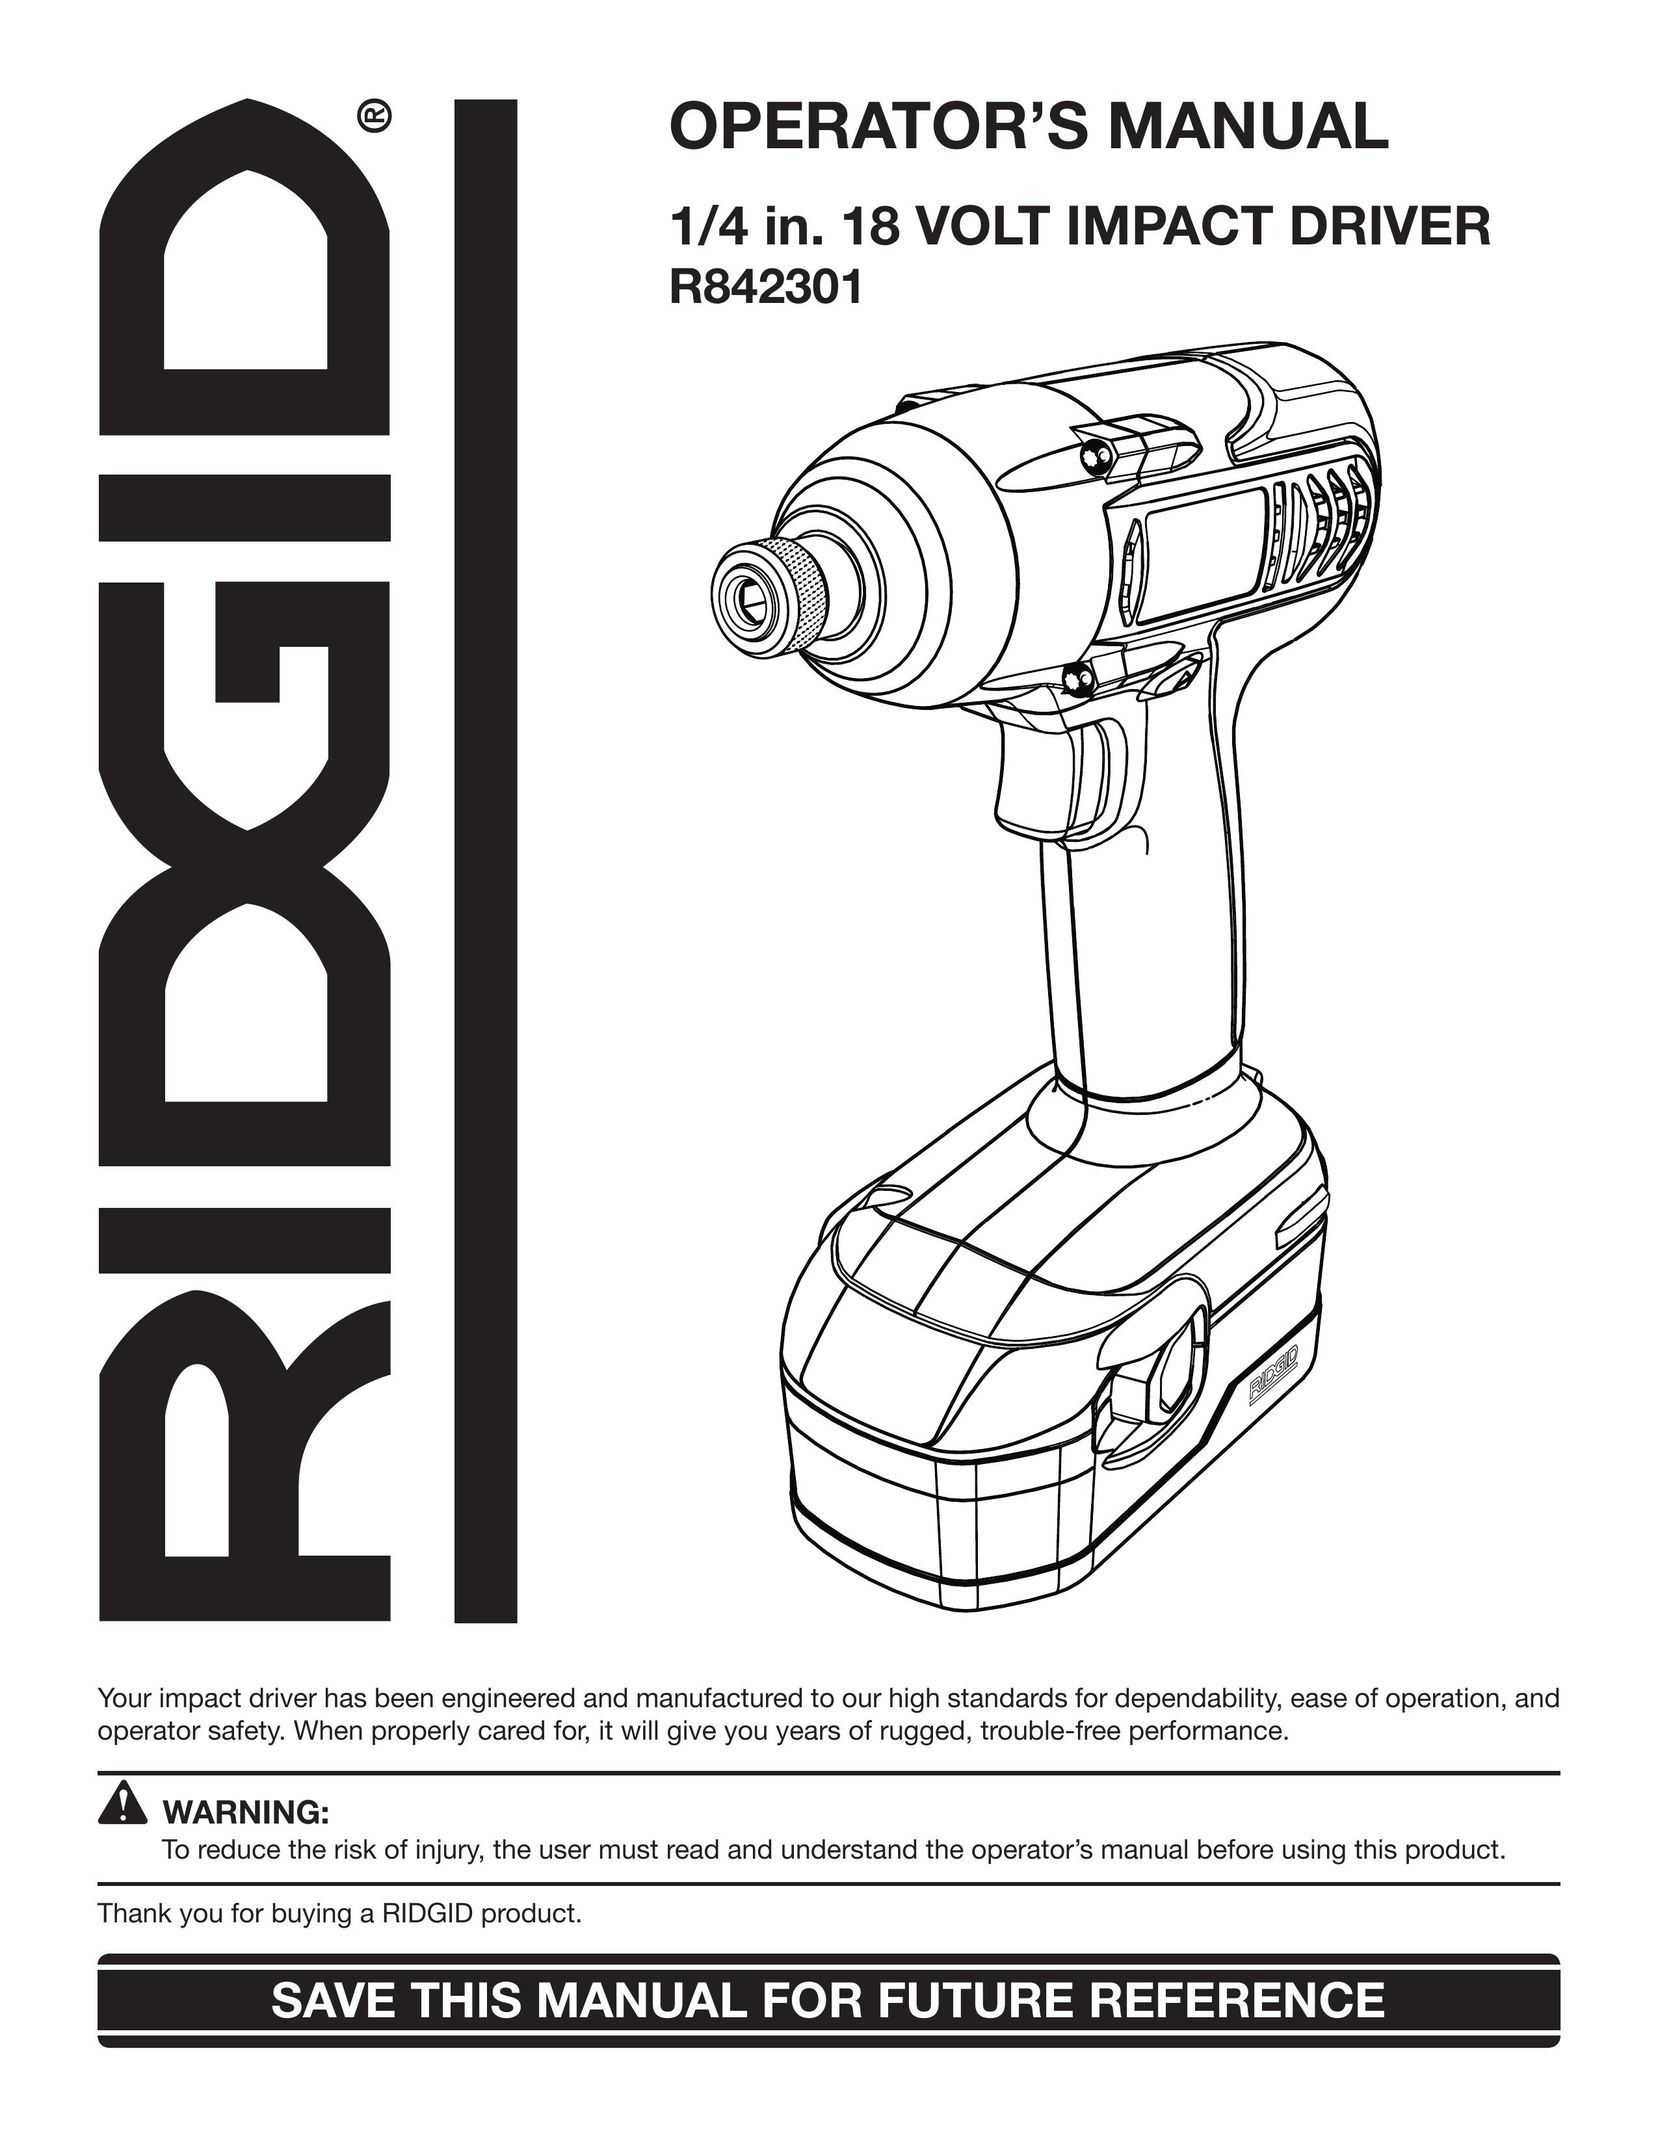 RIDGID R842301 Impact Driver User Manual